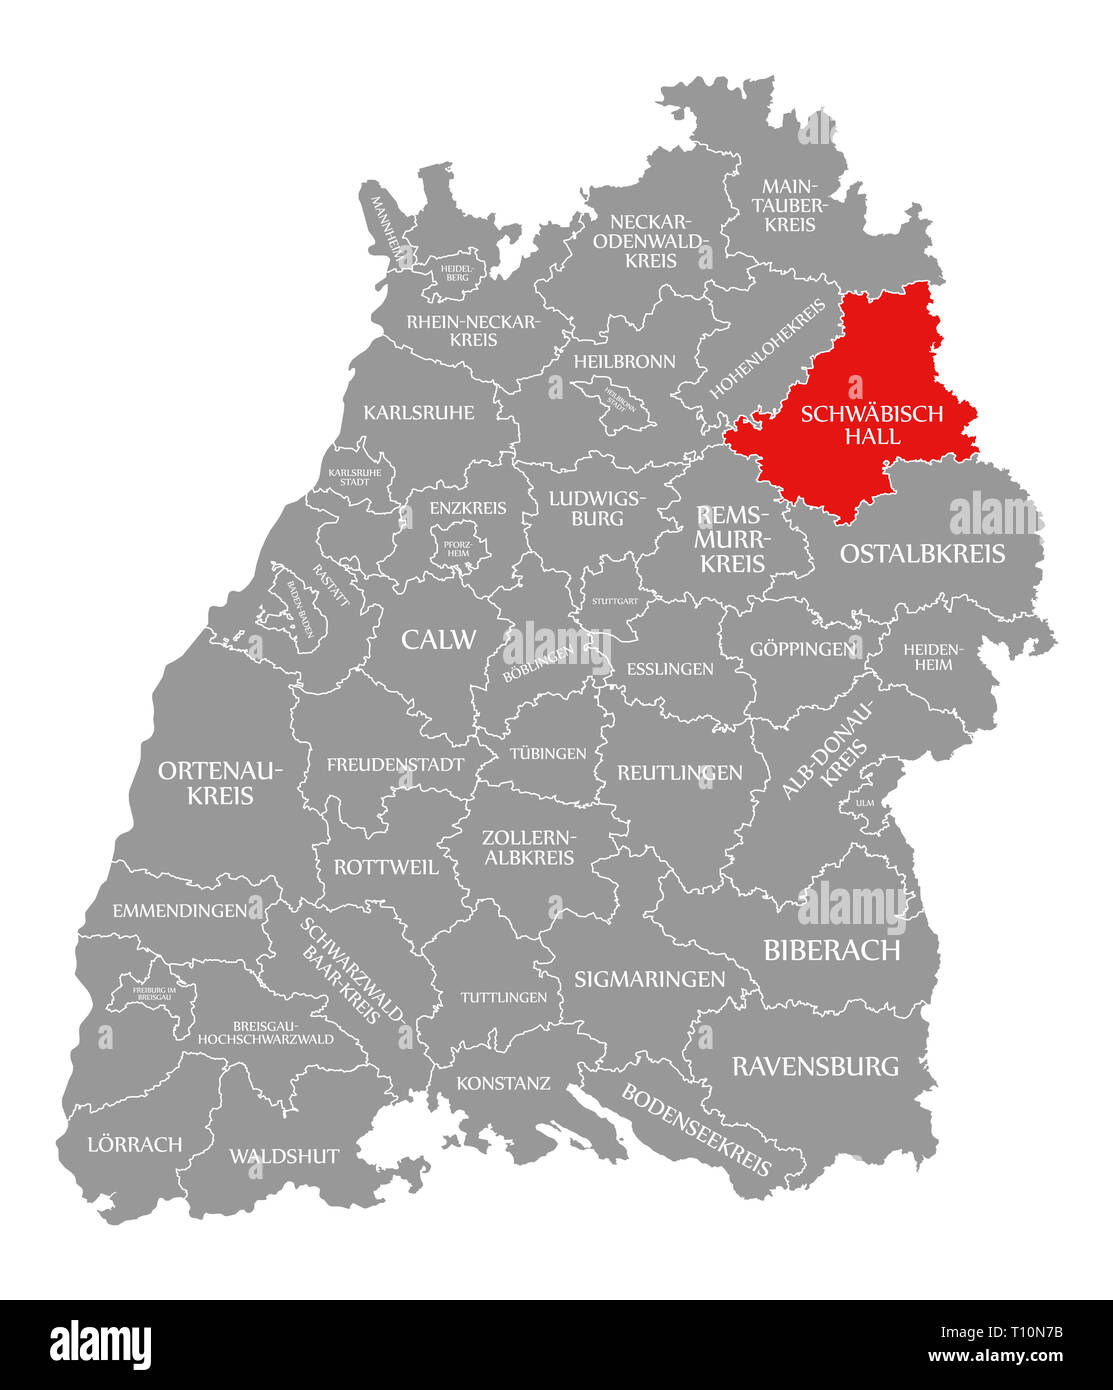 Schwaebisch Hall rouge comté mis en évidence dans la carte de Baden Württemberg Allemagne Banque D'Images